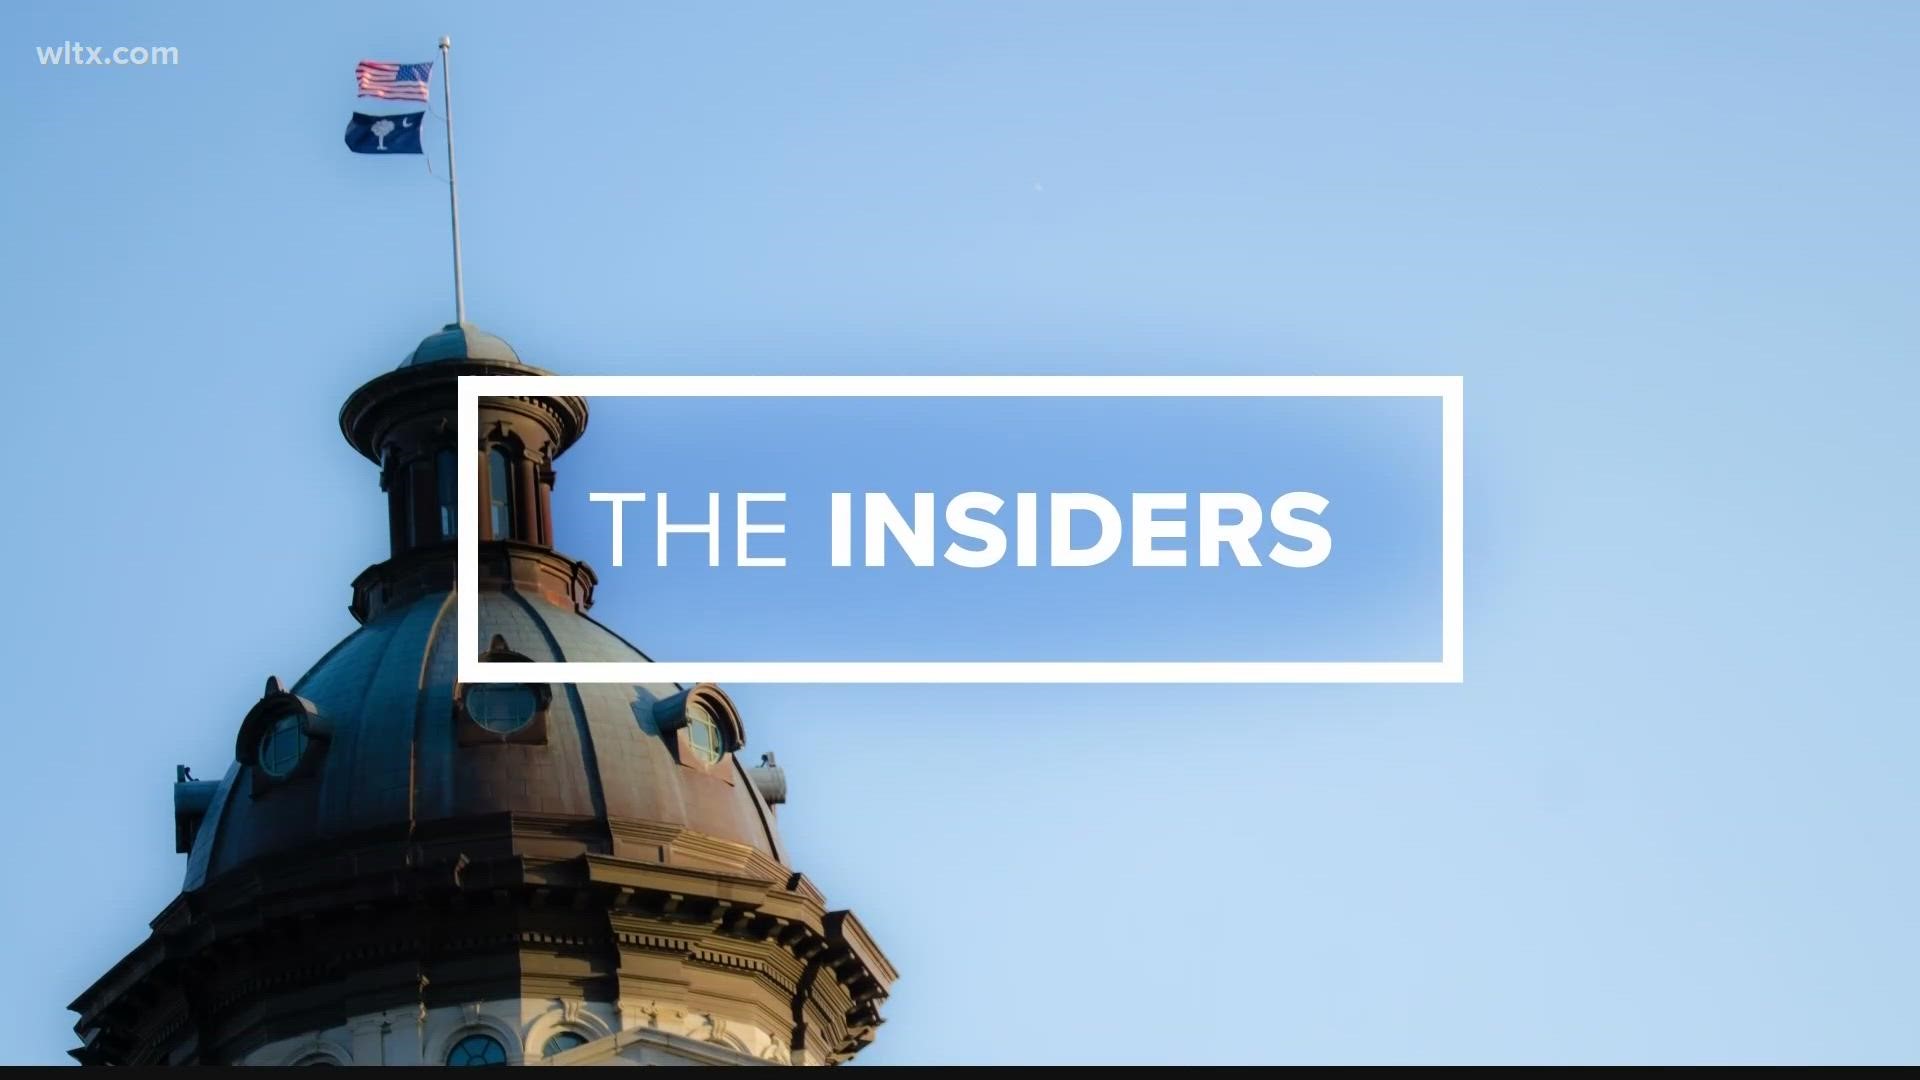 The WLTX Insiders talk about South Carolina politics.